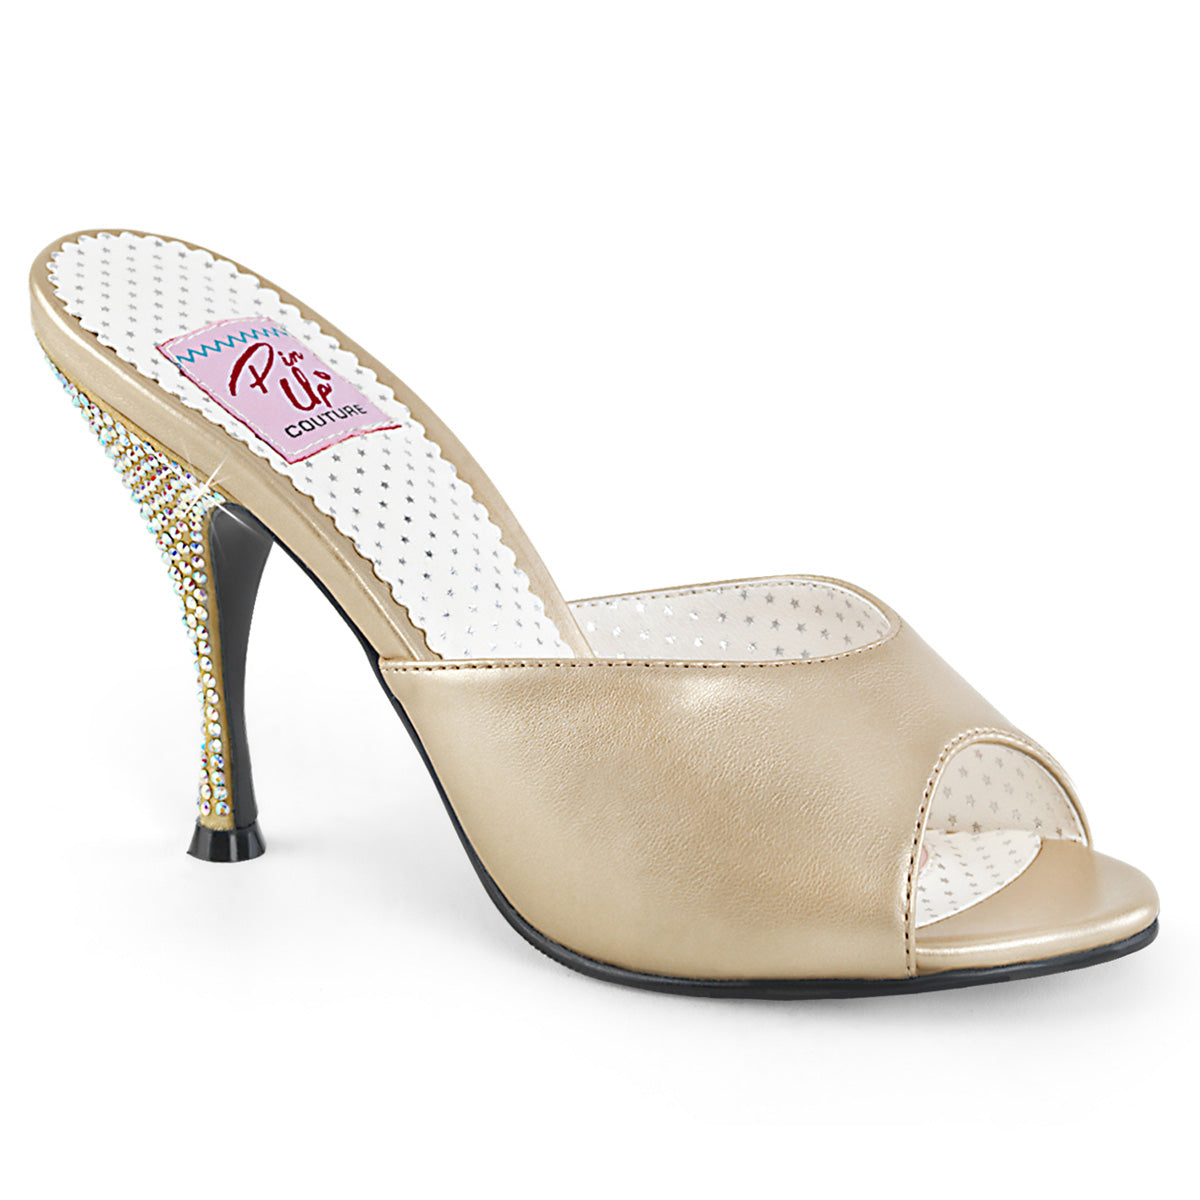 Marilyn Monroe Rhinestones Sandals Champagne